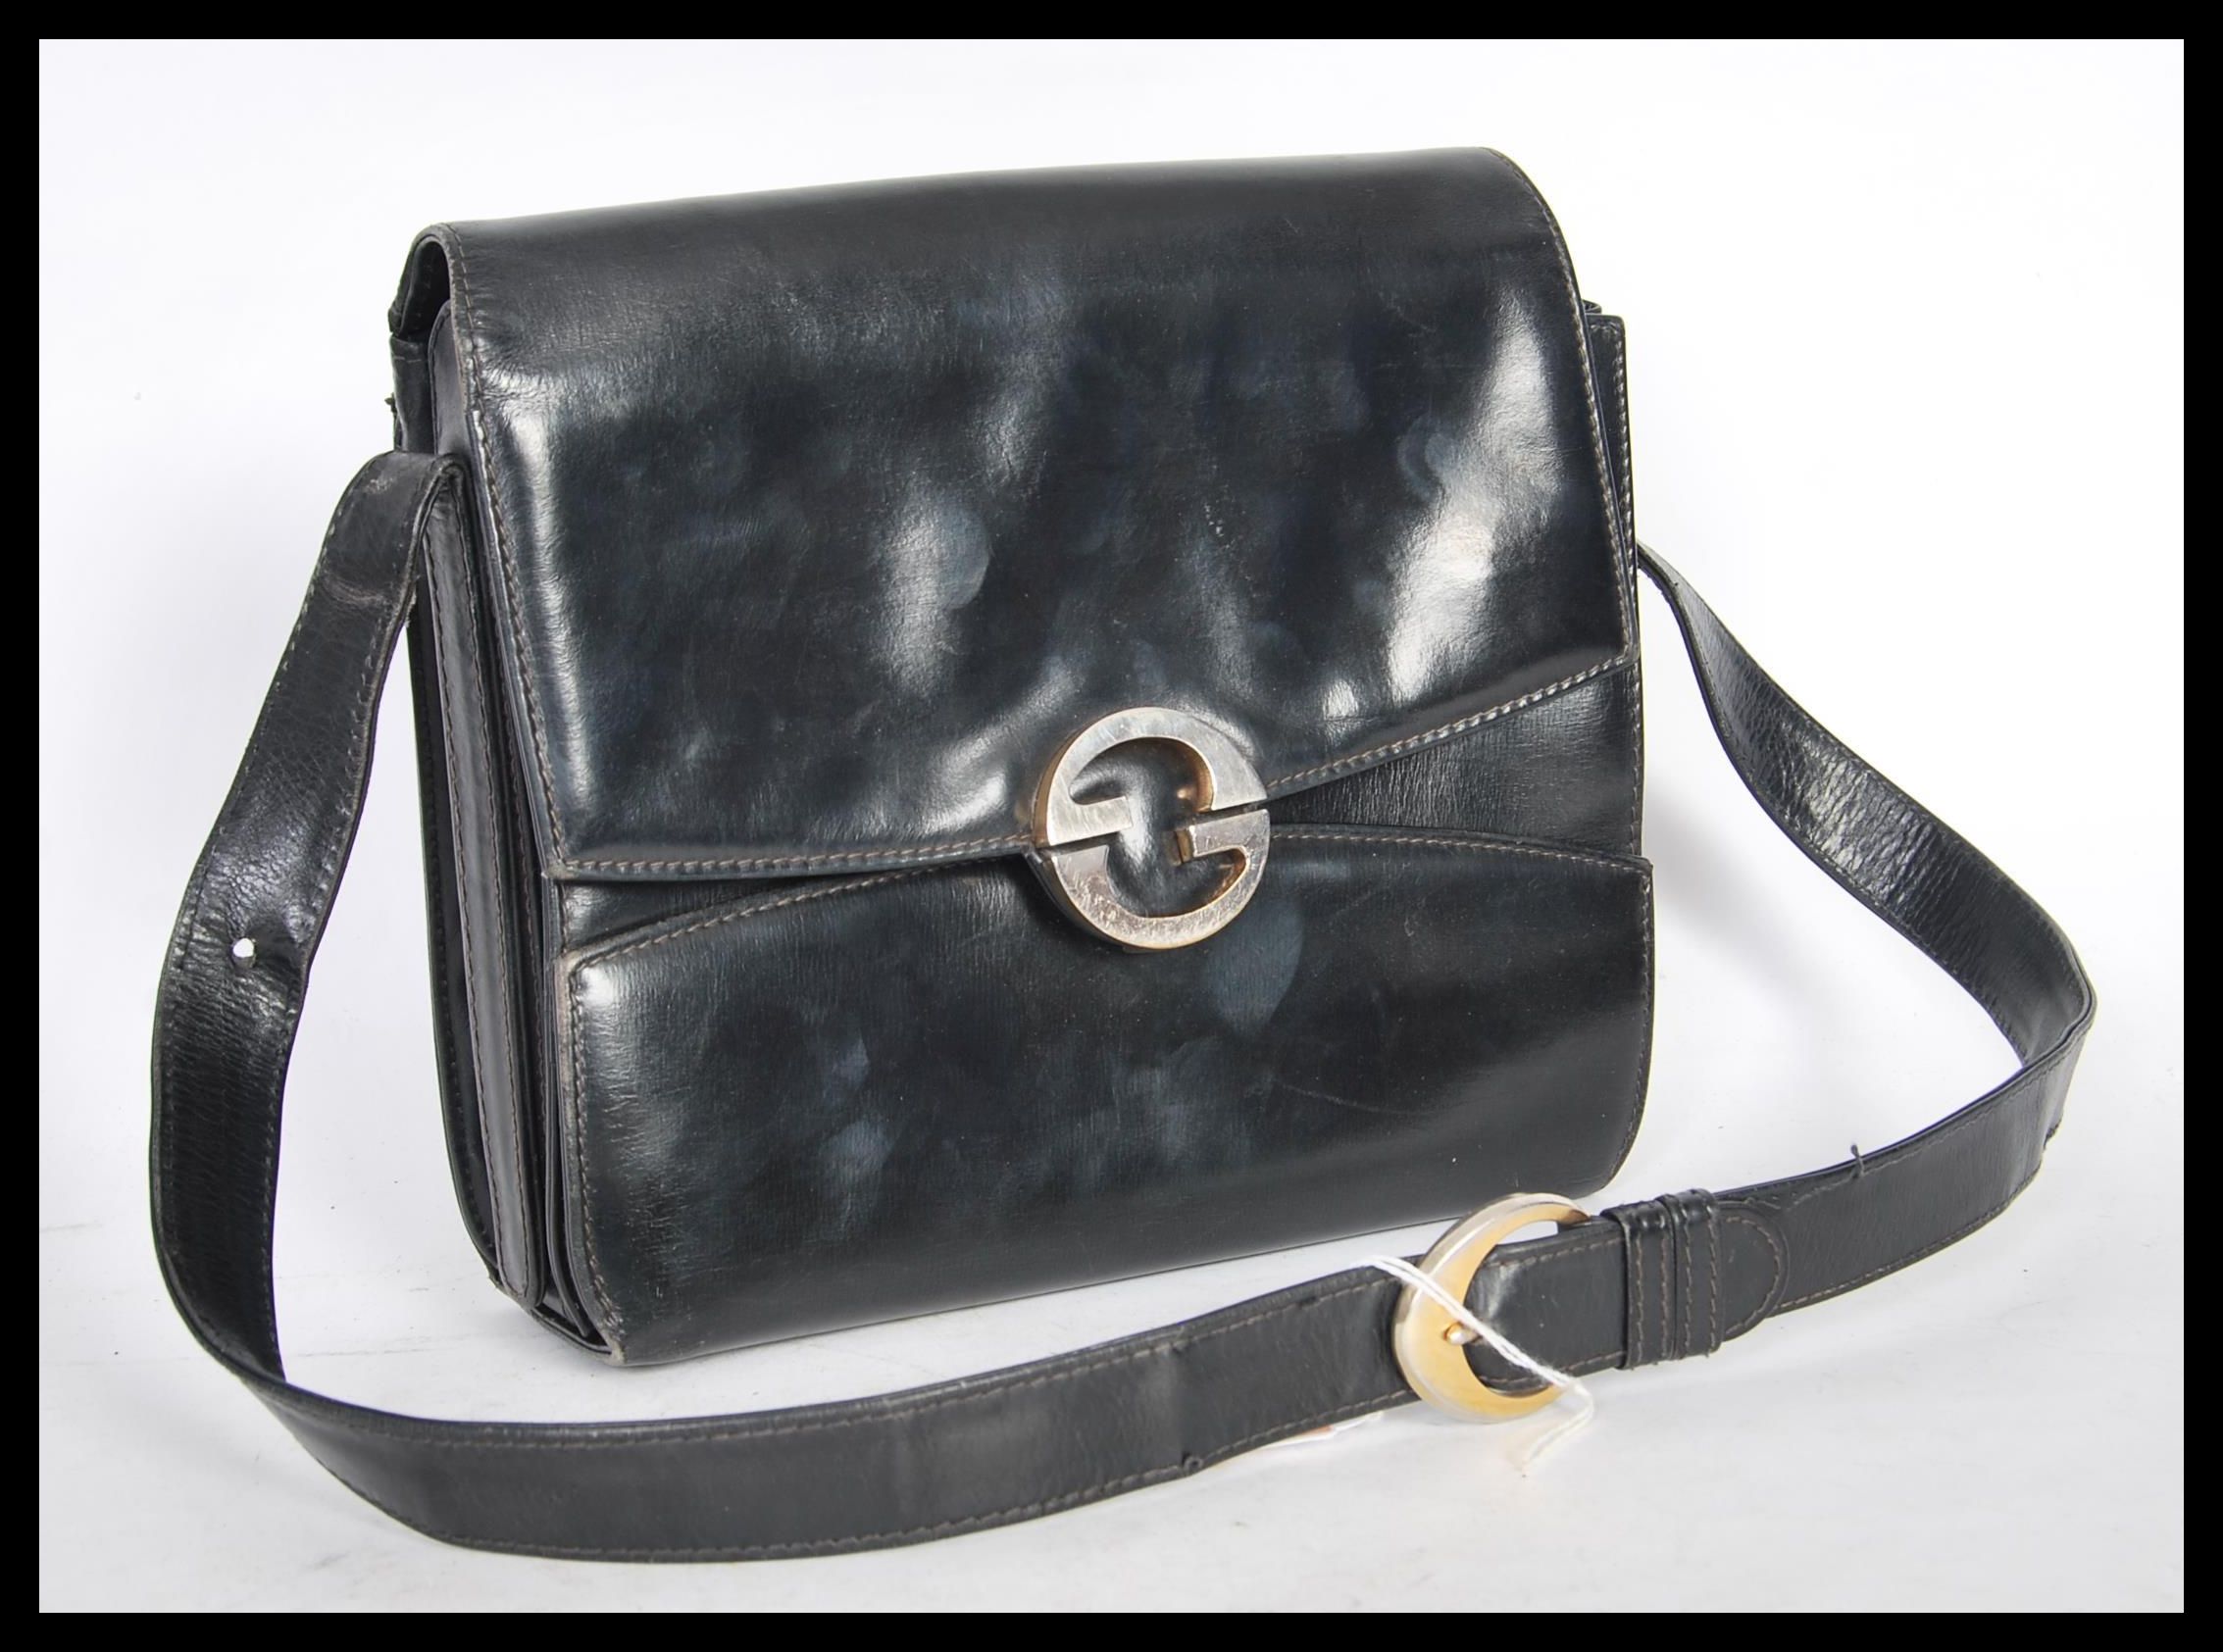 A 20th Century original designer Gucci black leather handbag with gilt metal interlocking G clasps